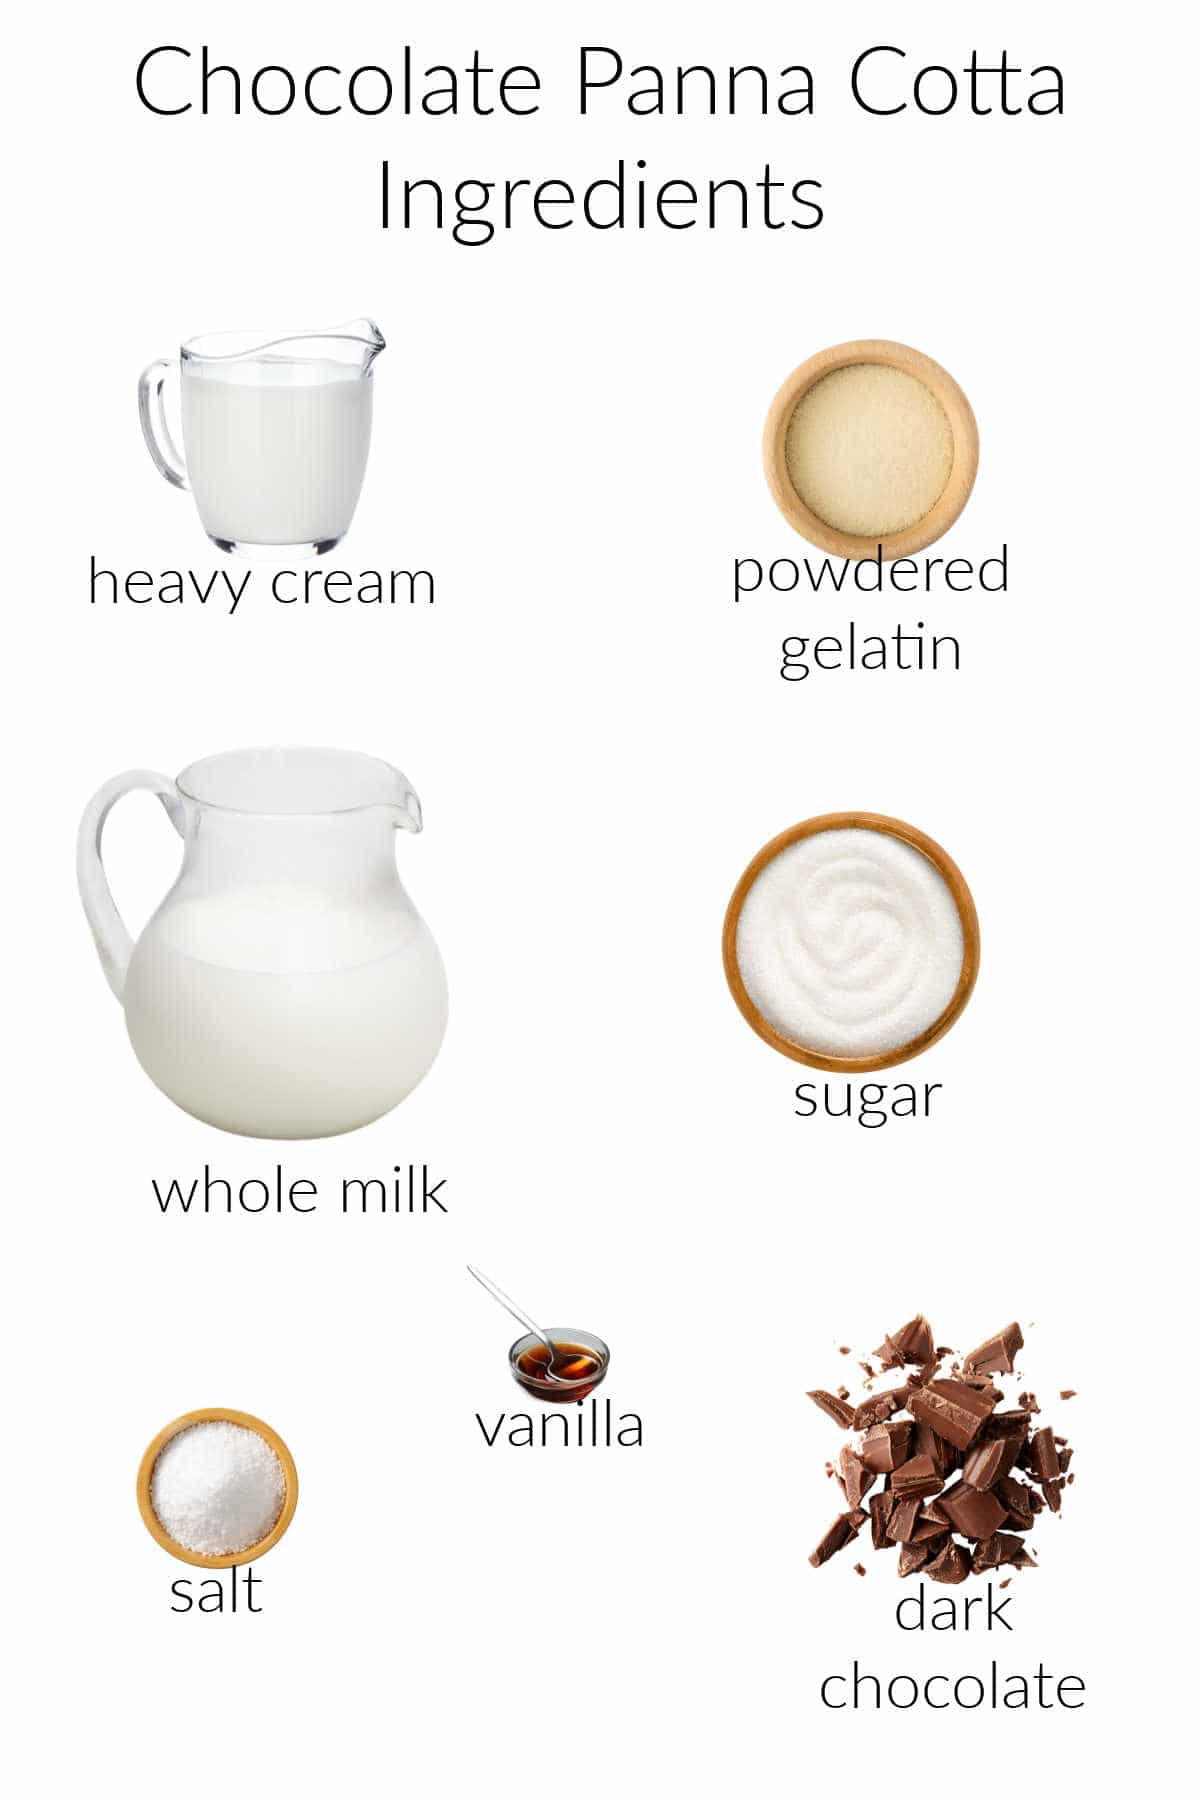 A collage of ingredients for making chocolate panna cotta: heavy cream, gelatin, milk, sugar, salt, vanilla, and chopped chocolate.